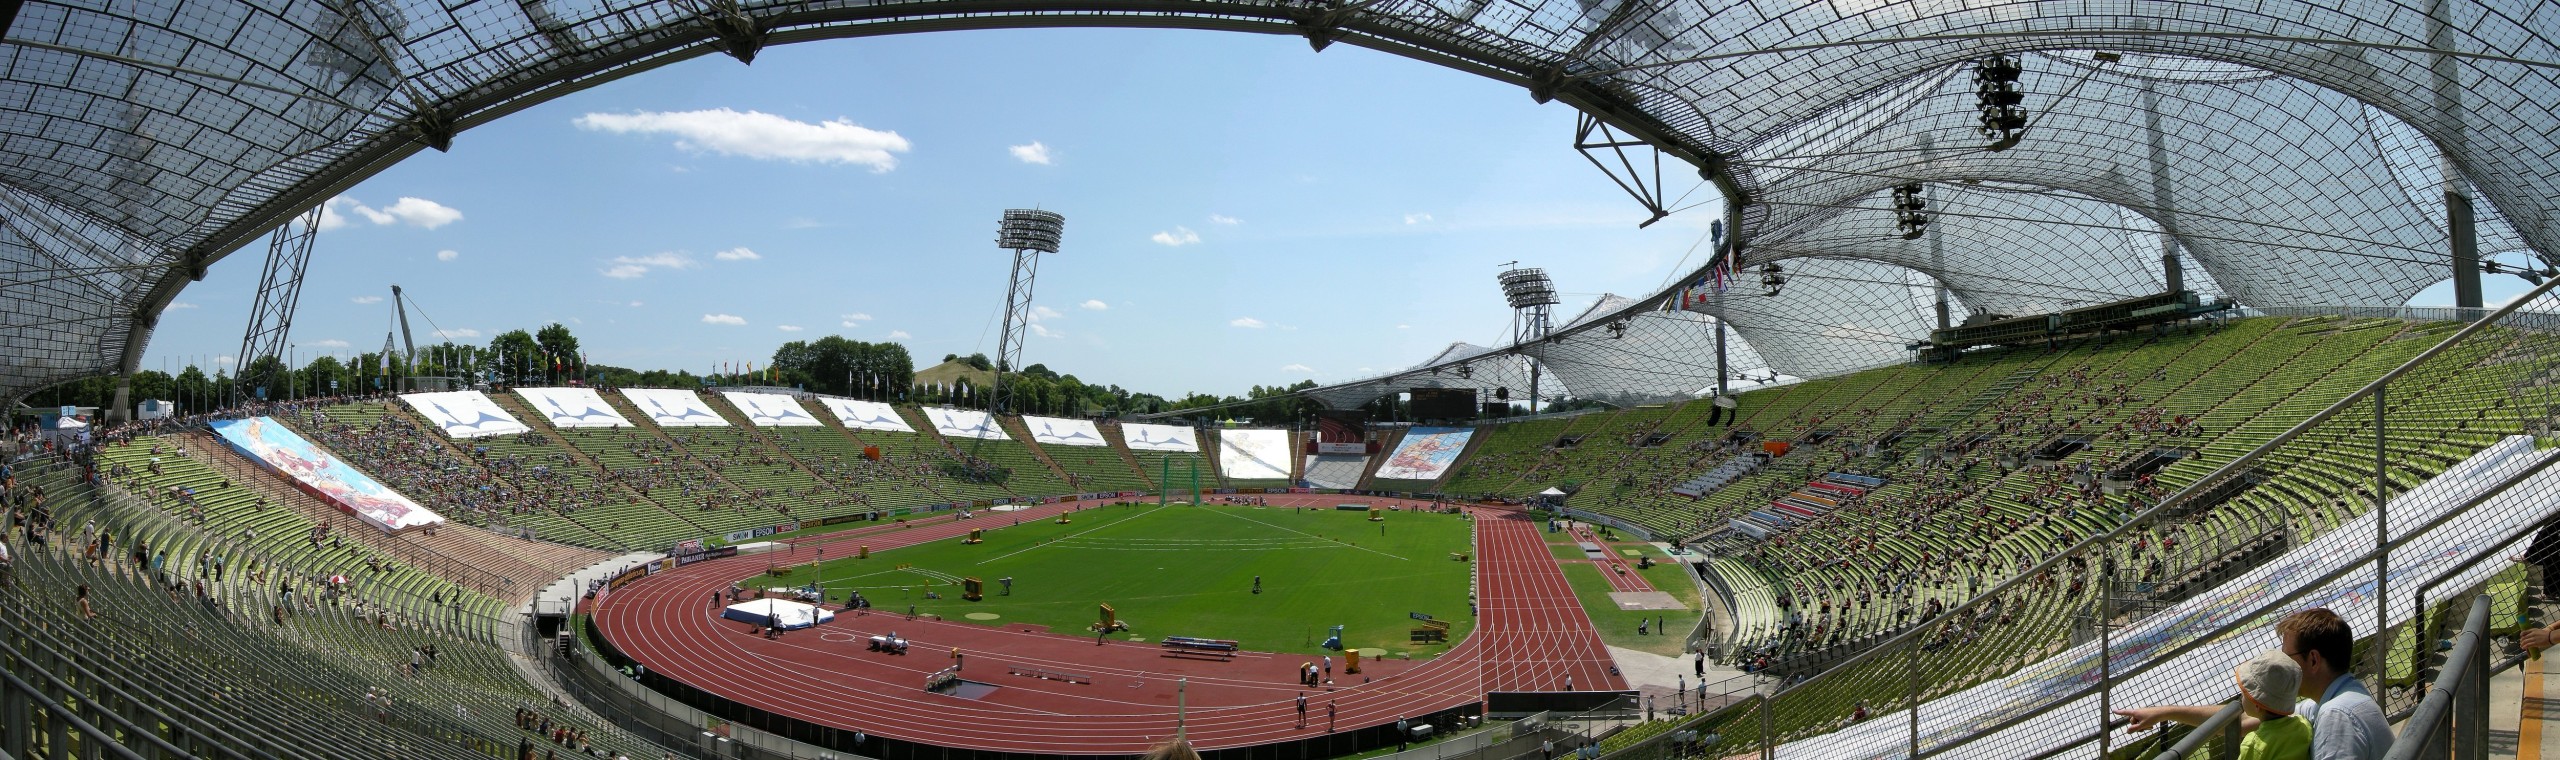 Blick in das Münchner Olympiastadion. Bildquelle: Tobi 87, CC BY-SA 4.0 , via Wikimedia Commons